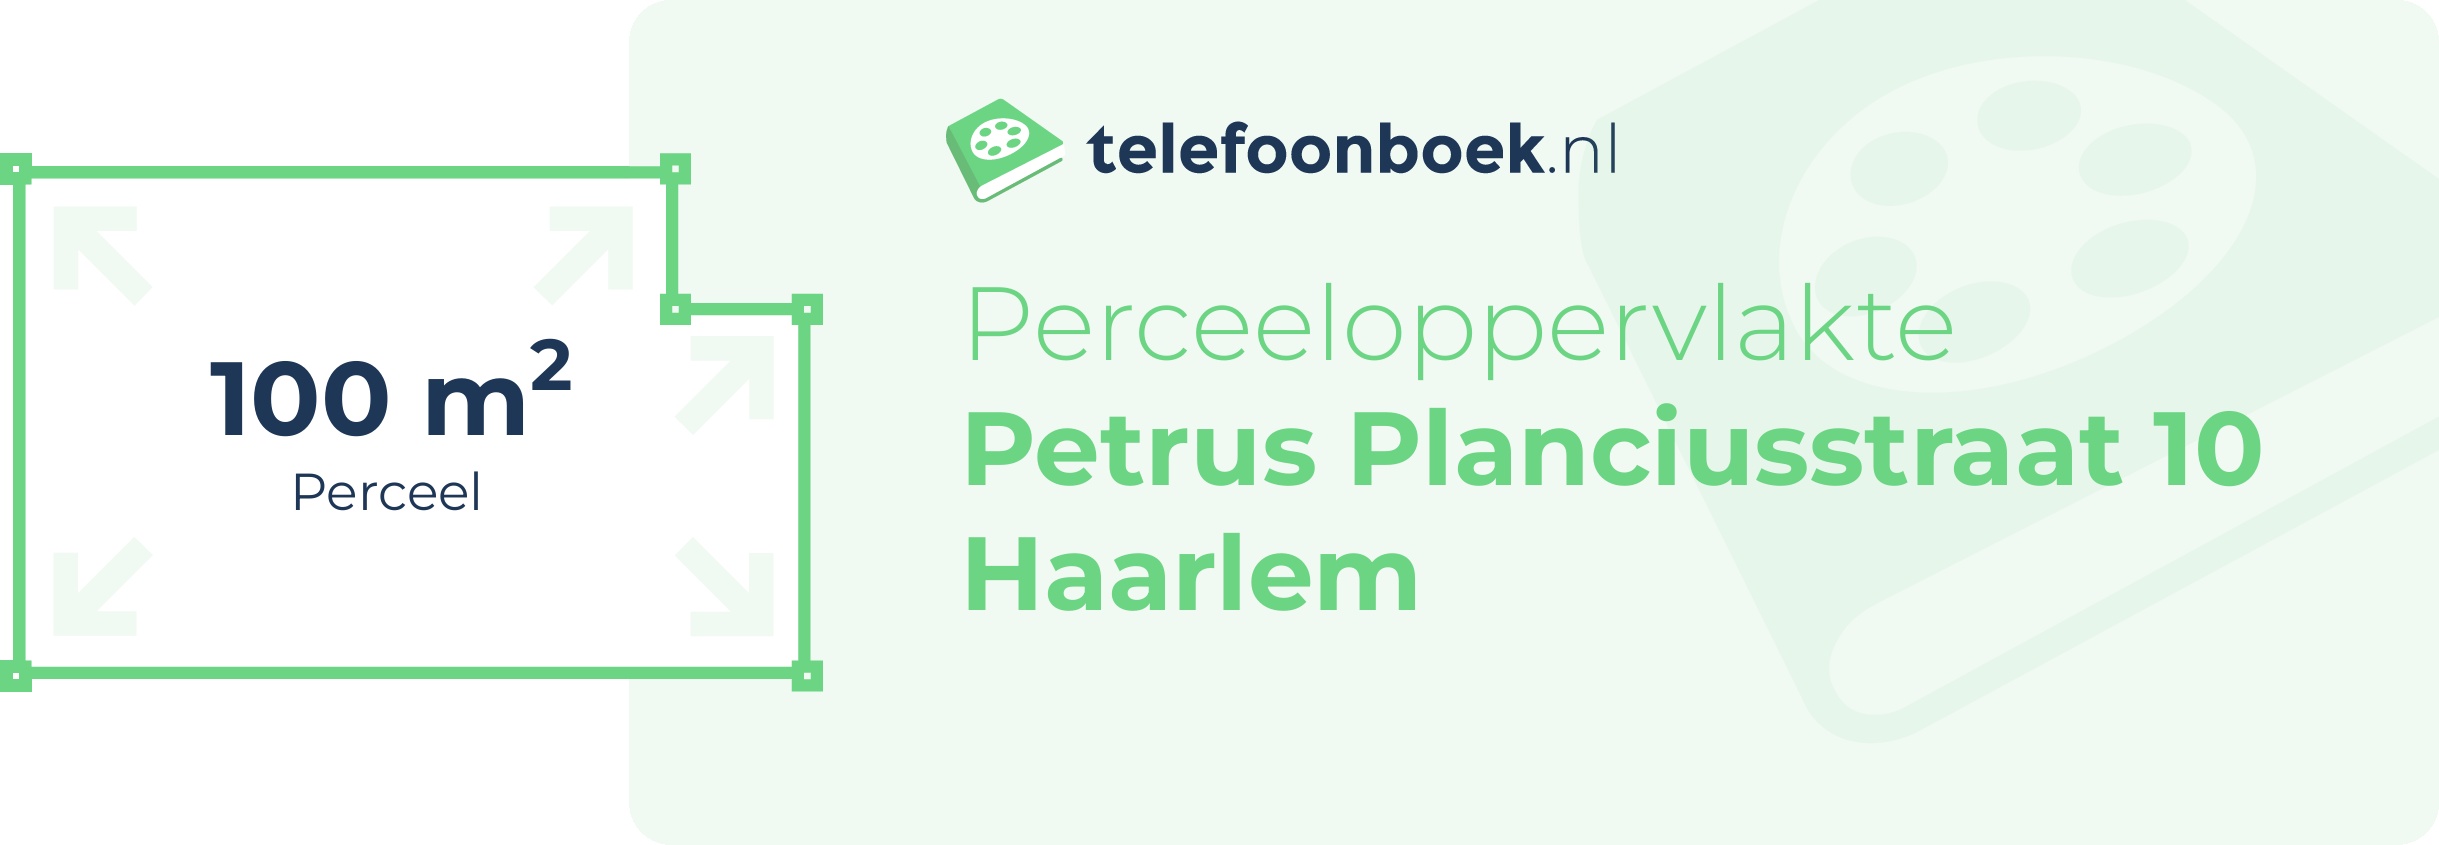 Perceeloppervlakte Petrus Planciusstraat 10 Haarlem